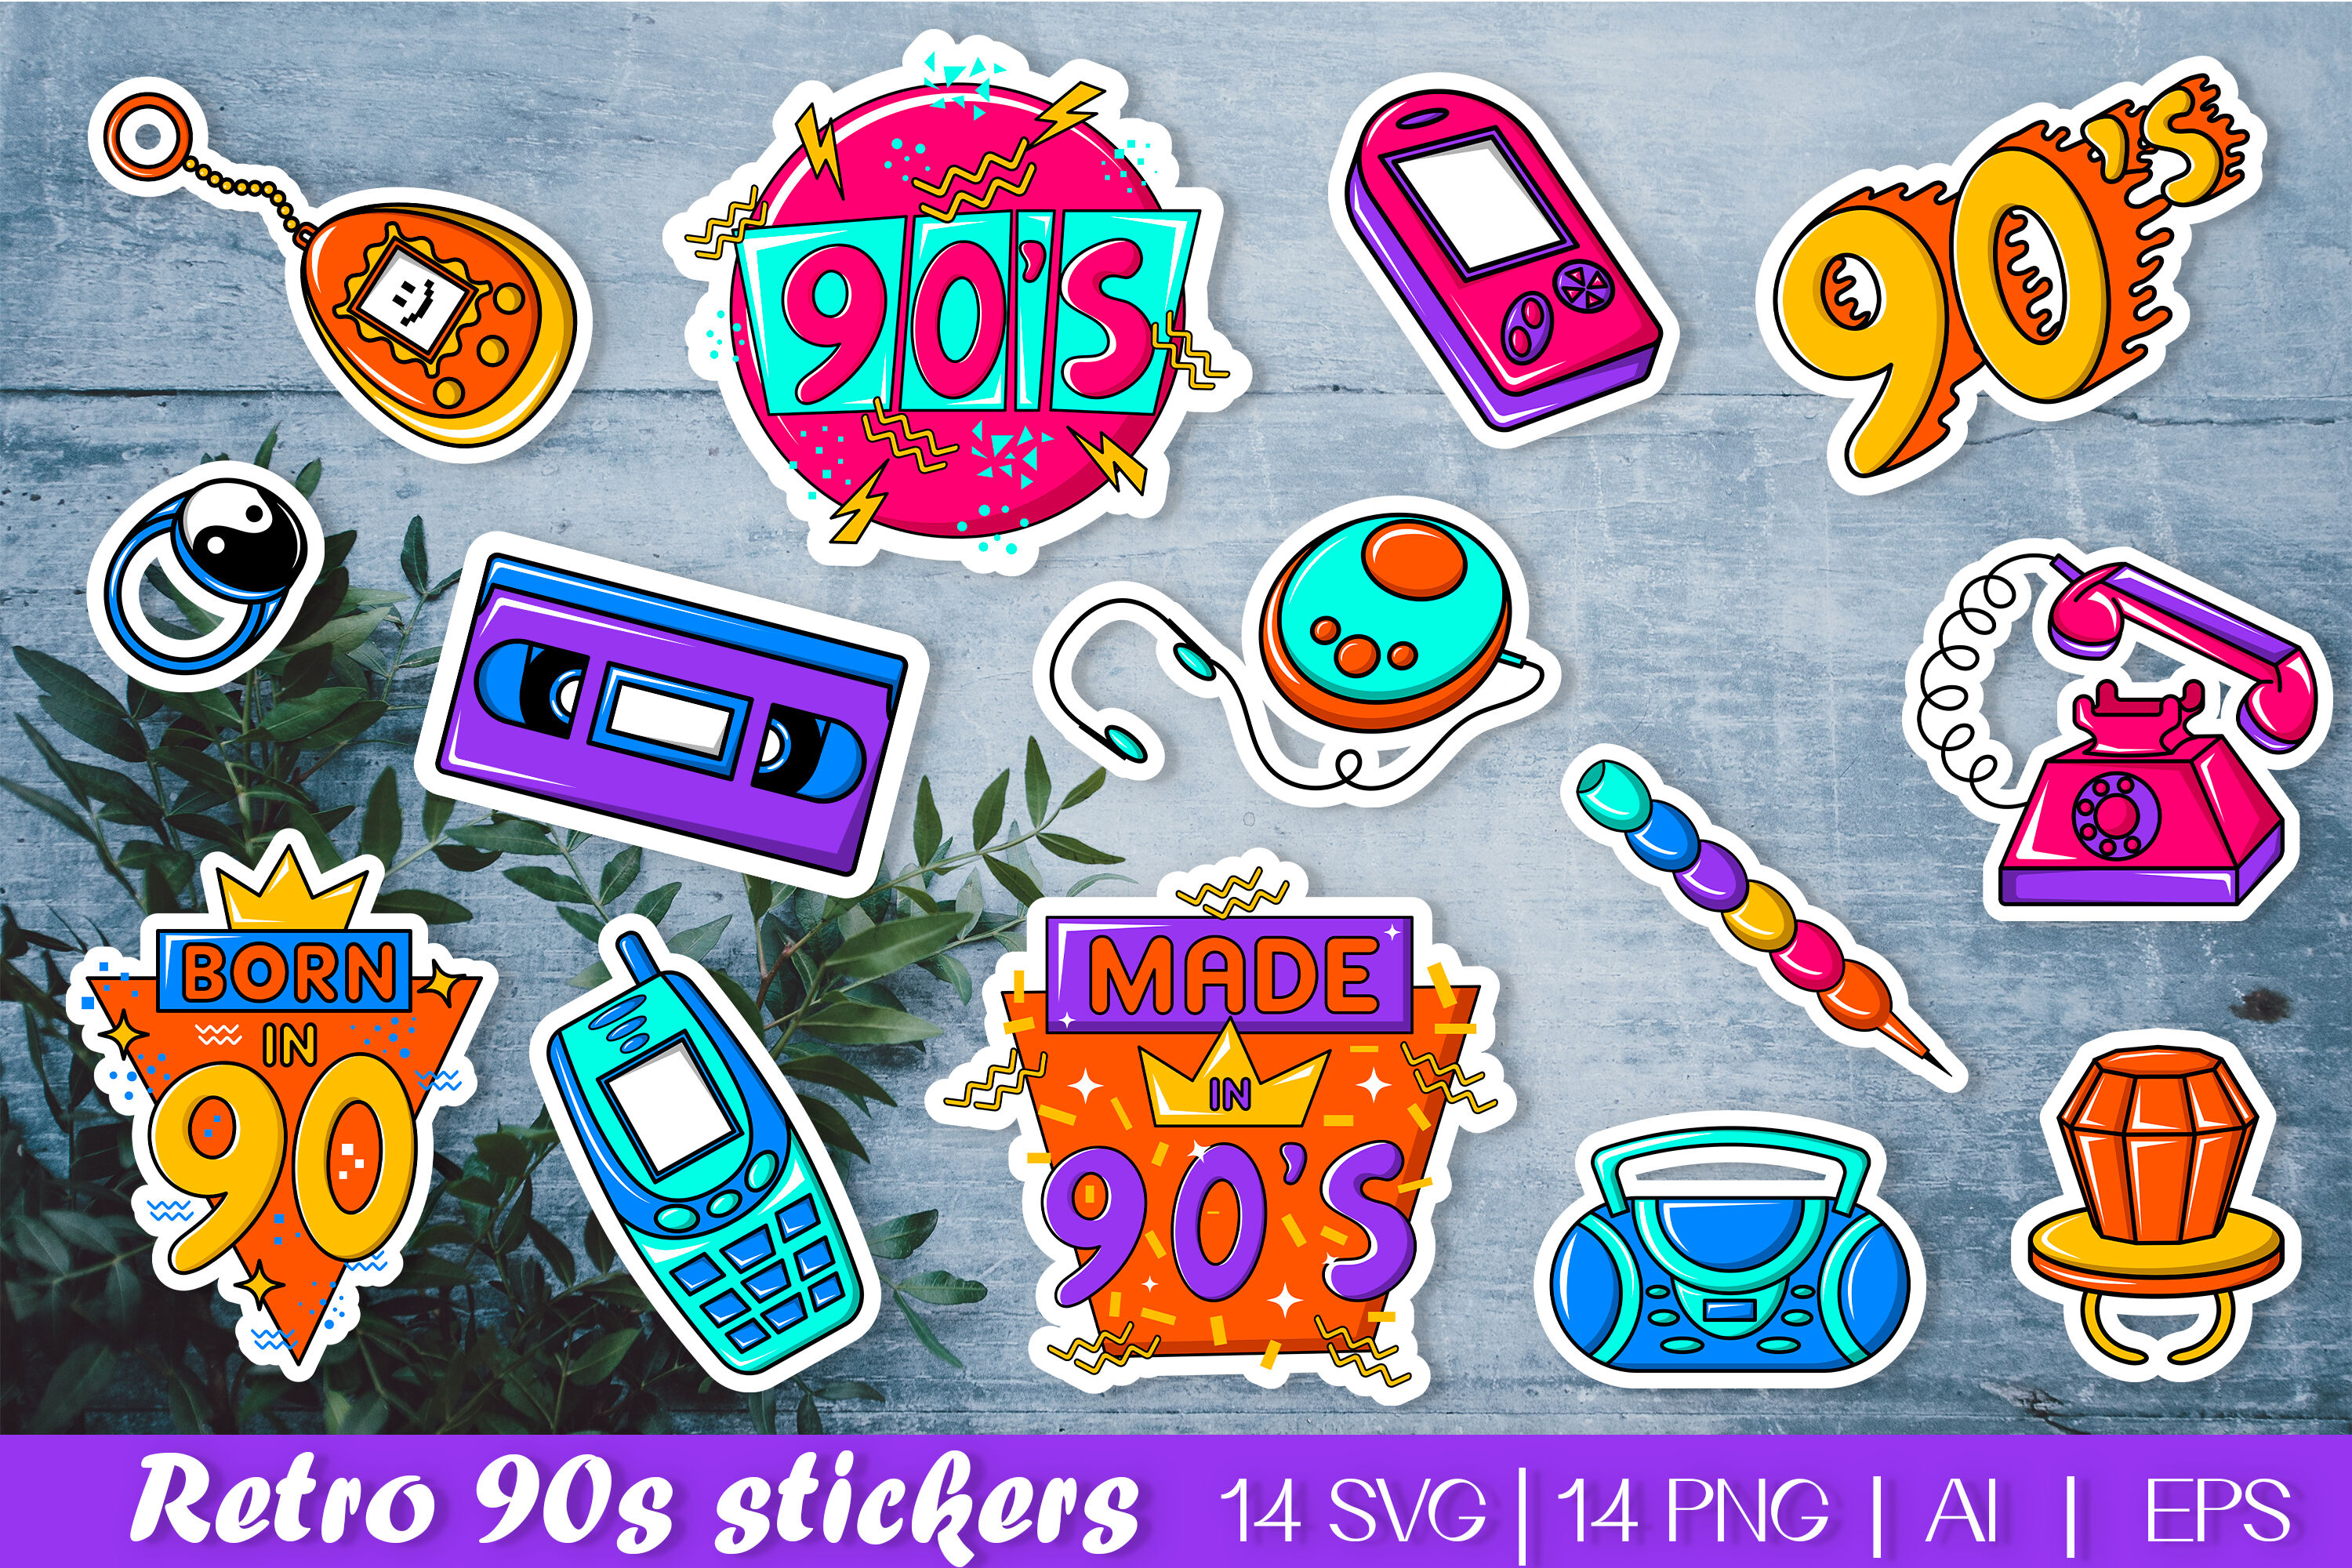 Retro 90s Stickers PNG, Vintage sticker bundle By Boo Guevara Shop